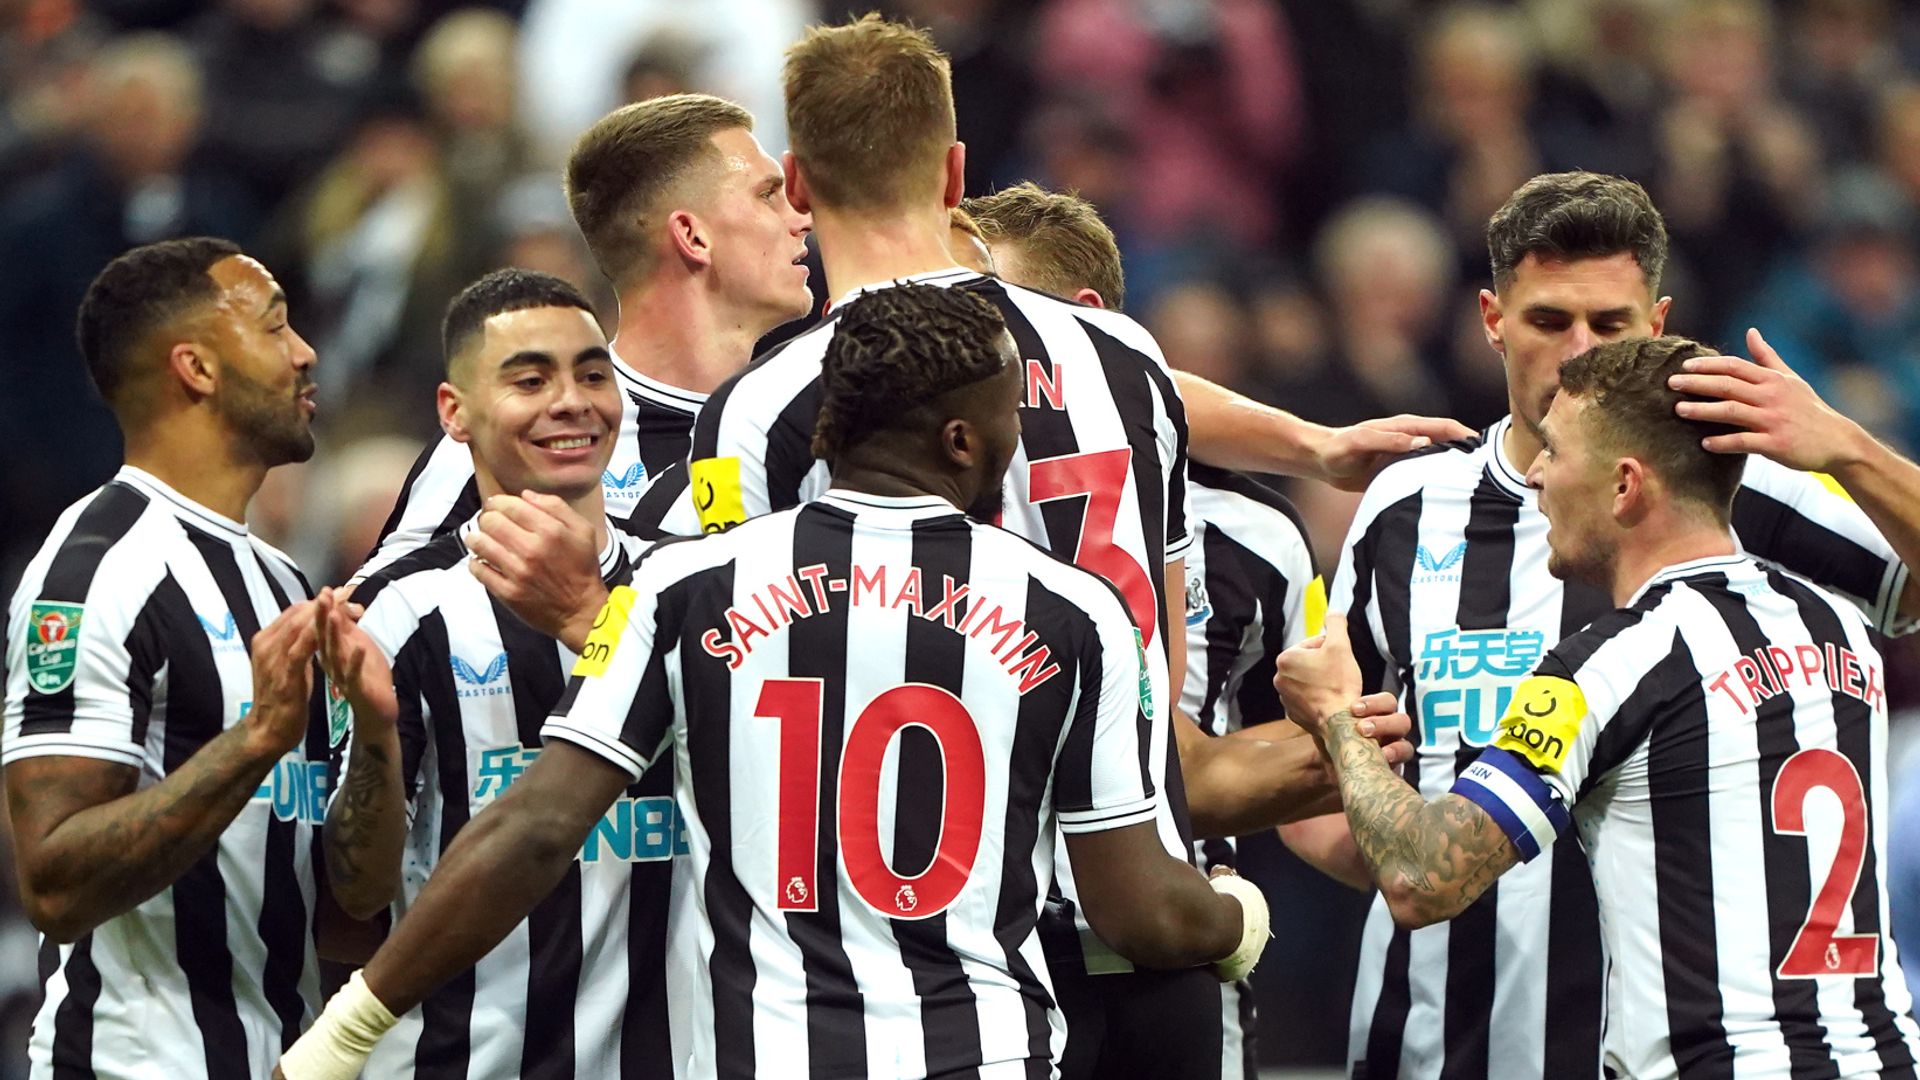 Newcastle sneak past Bournemouth despite dominant display